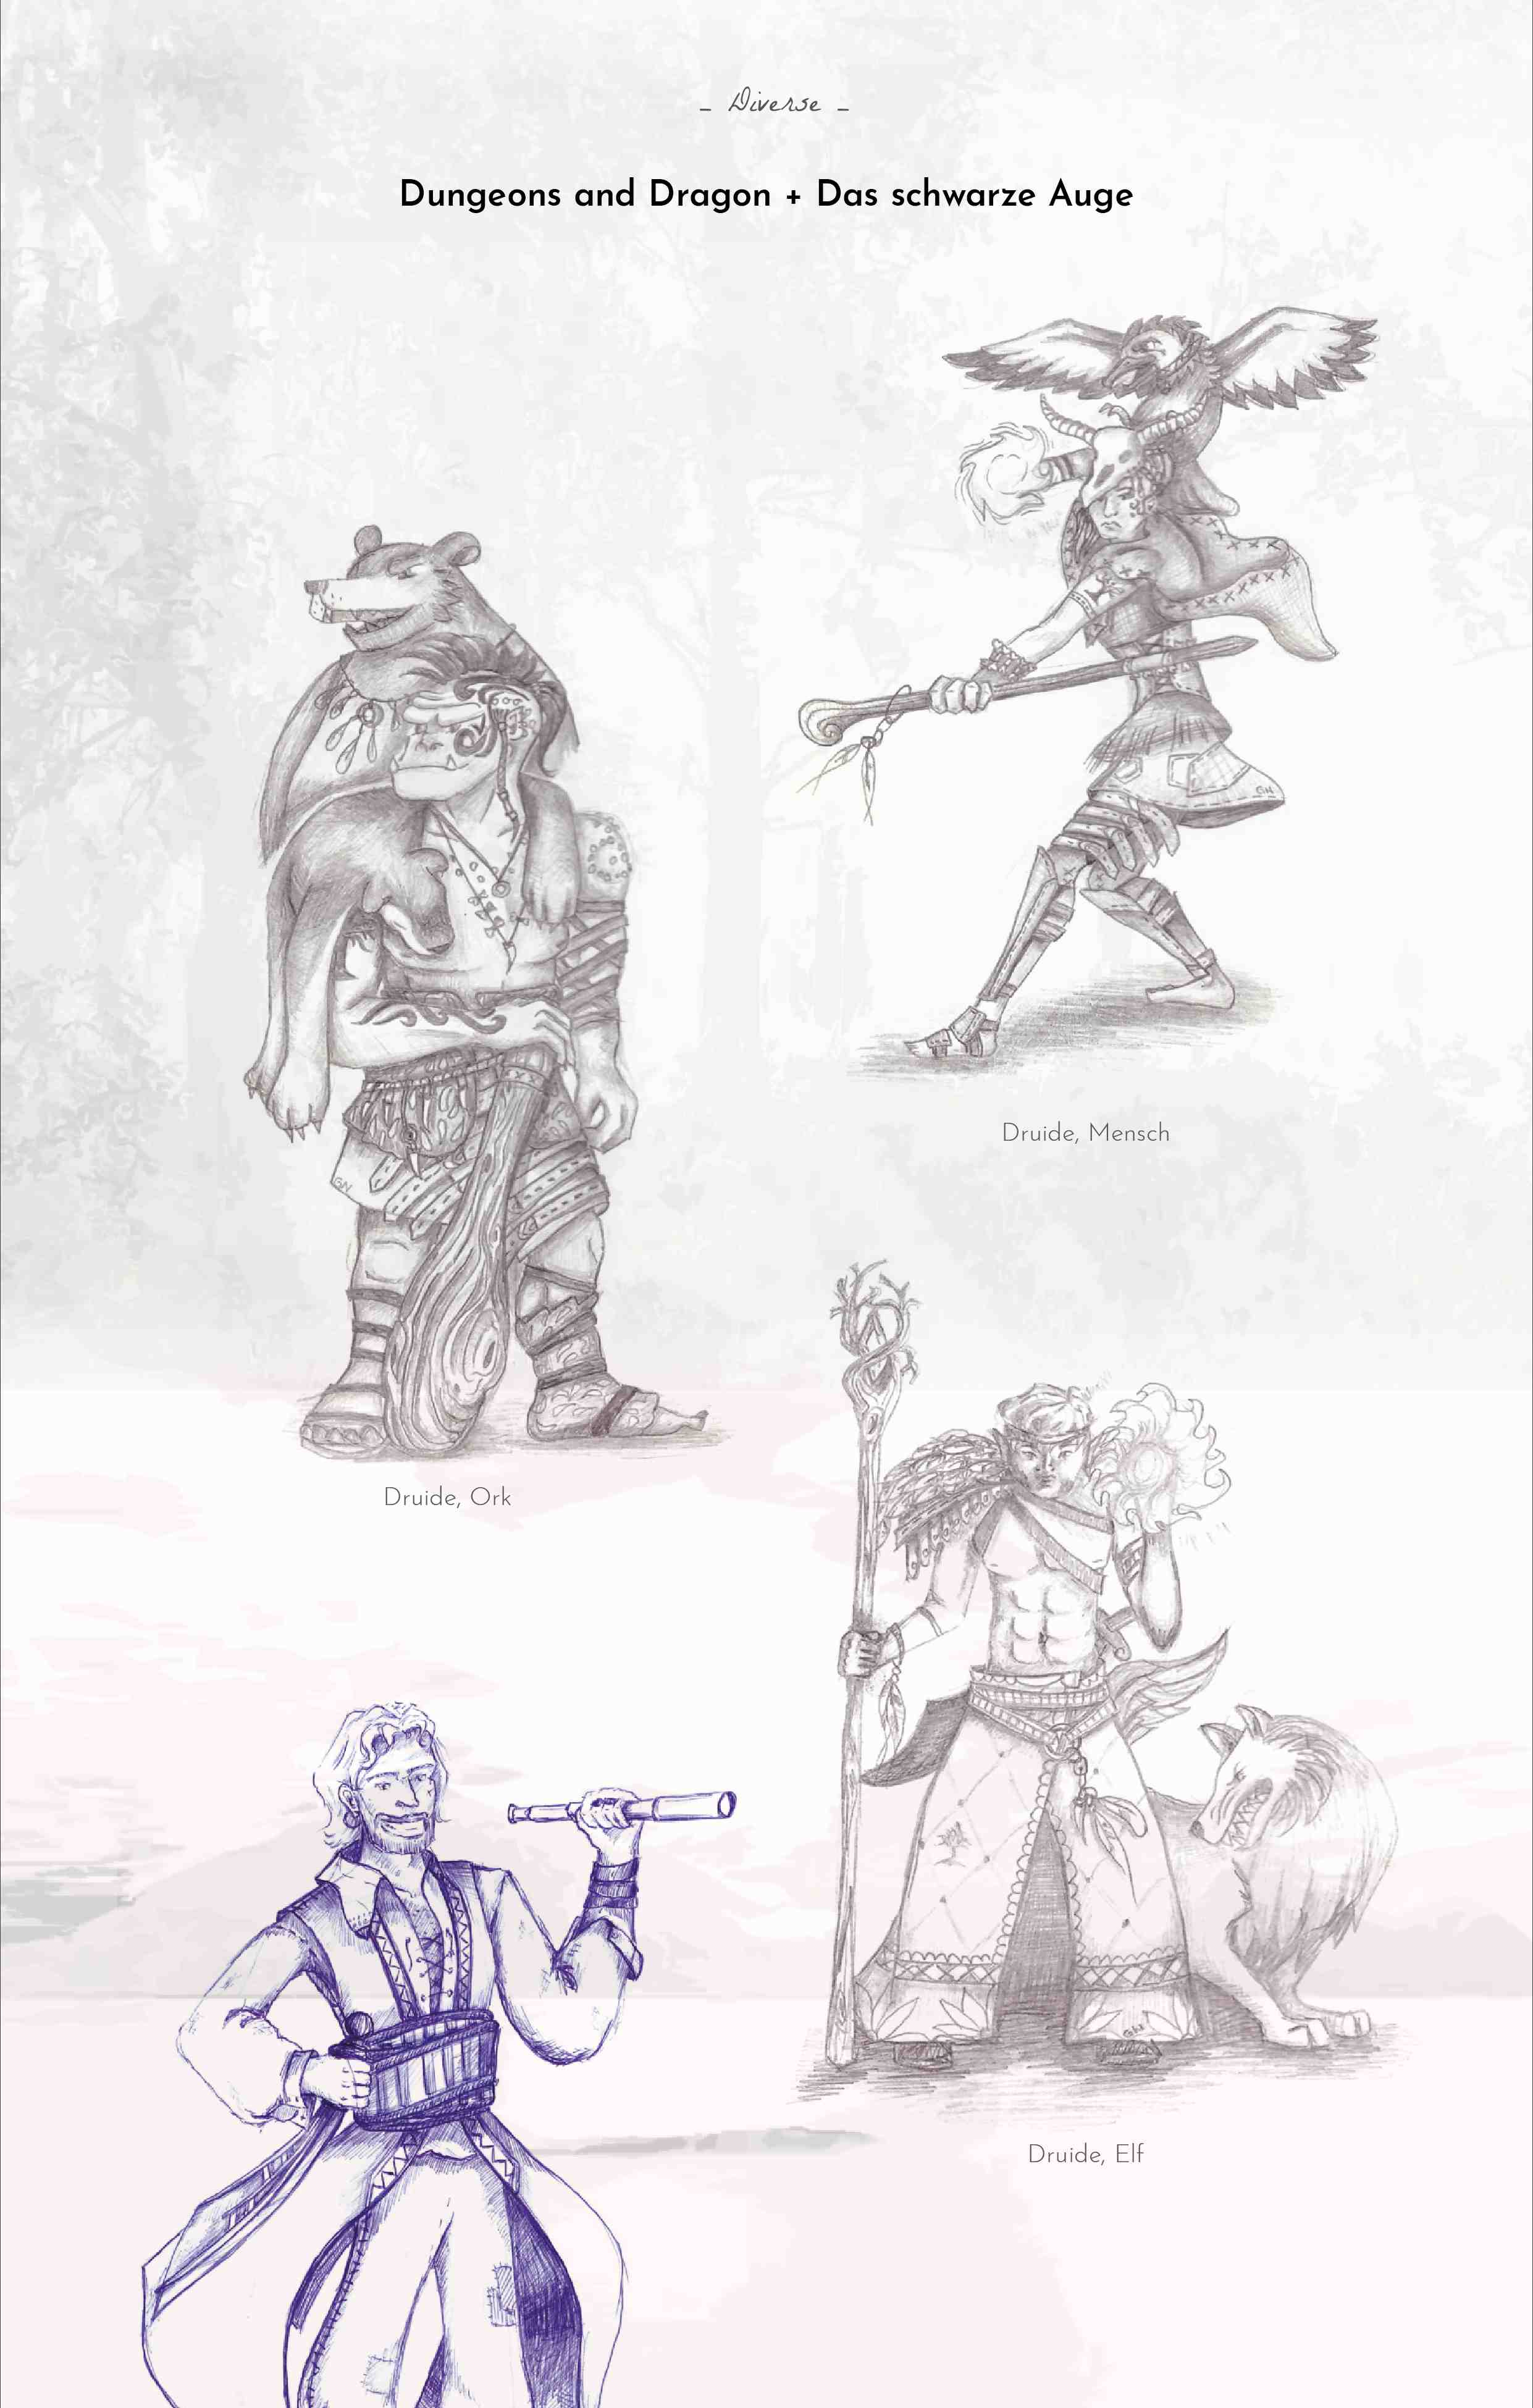 Pen and Paper Charakterdesign Druide Mensch, Druide Ork, Druide Elf, Pirat